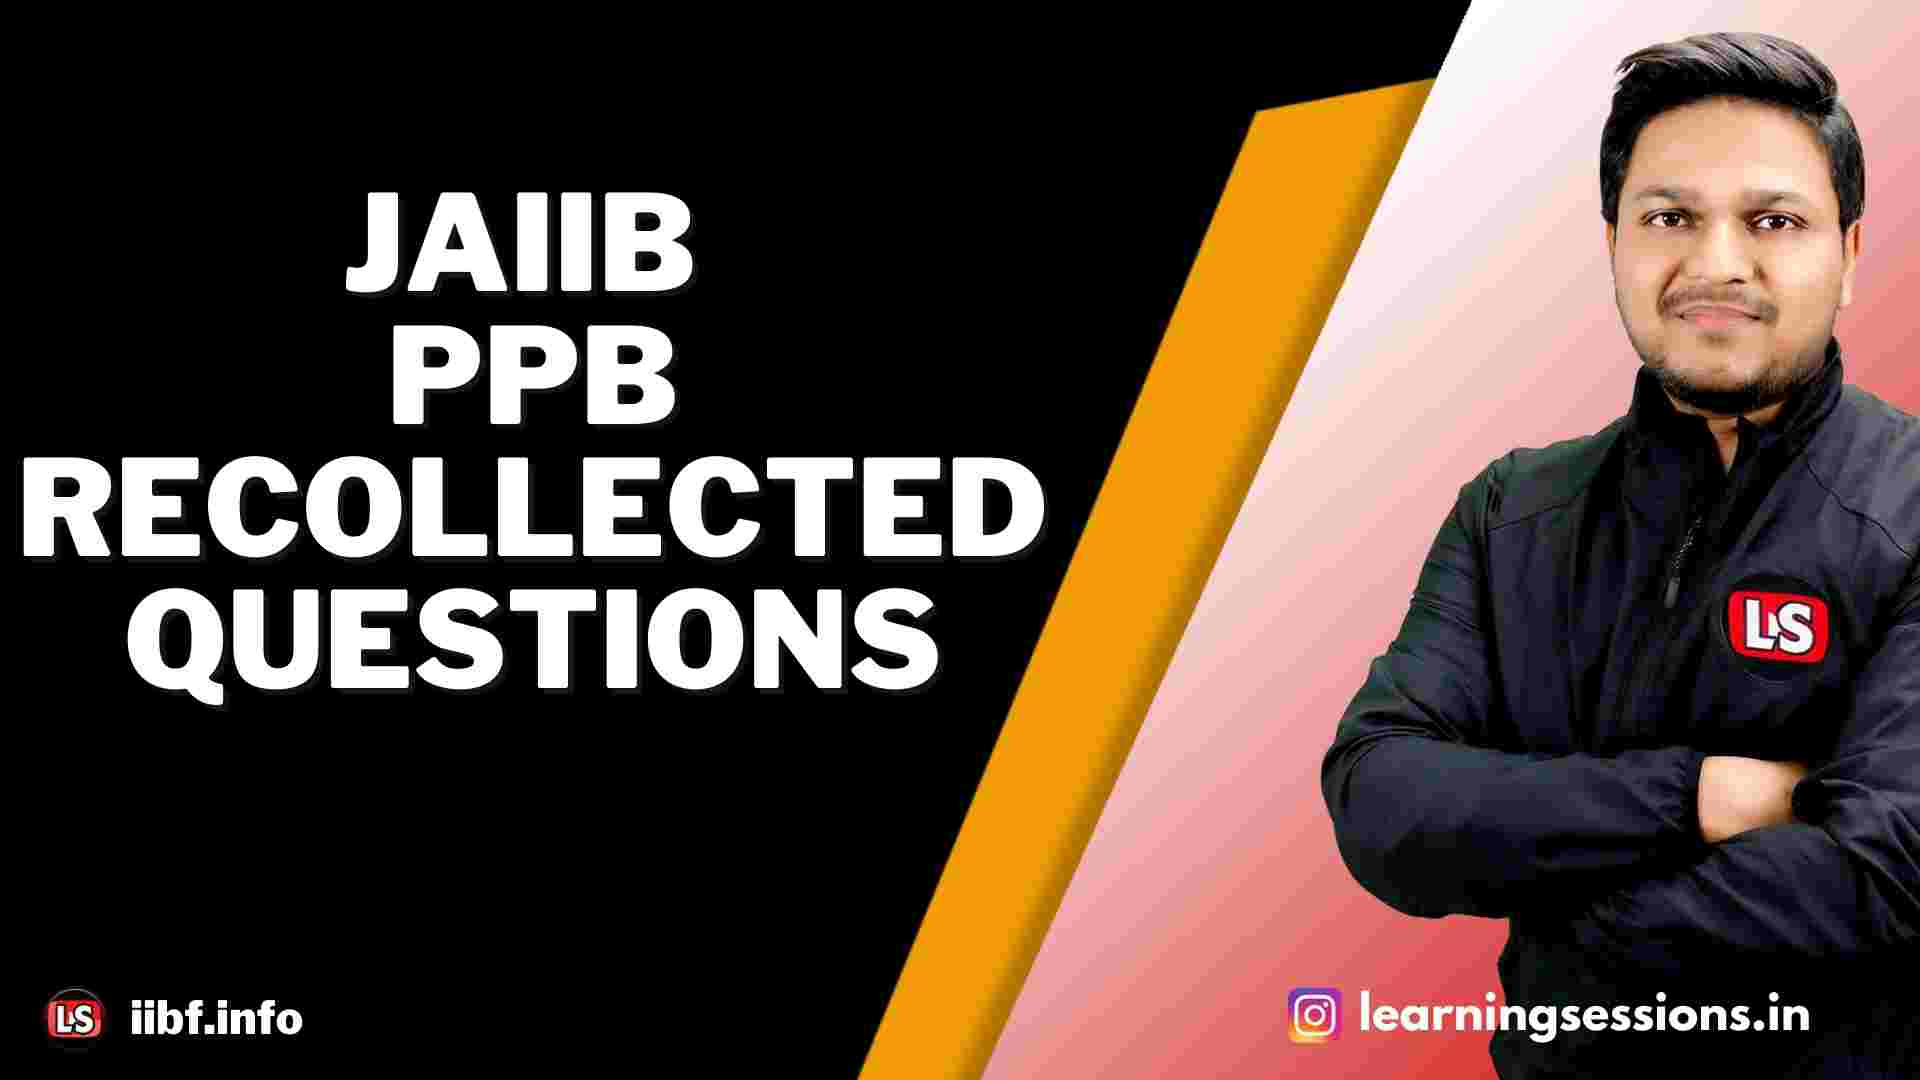 IIBF JAIIB PPB RECOLLECTED QUESTIONS FOR 2021-2022 EXAM